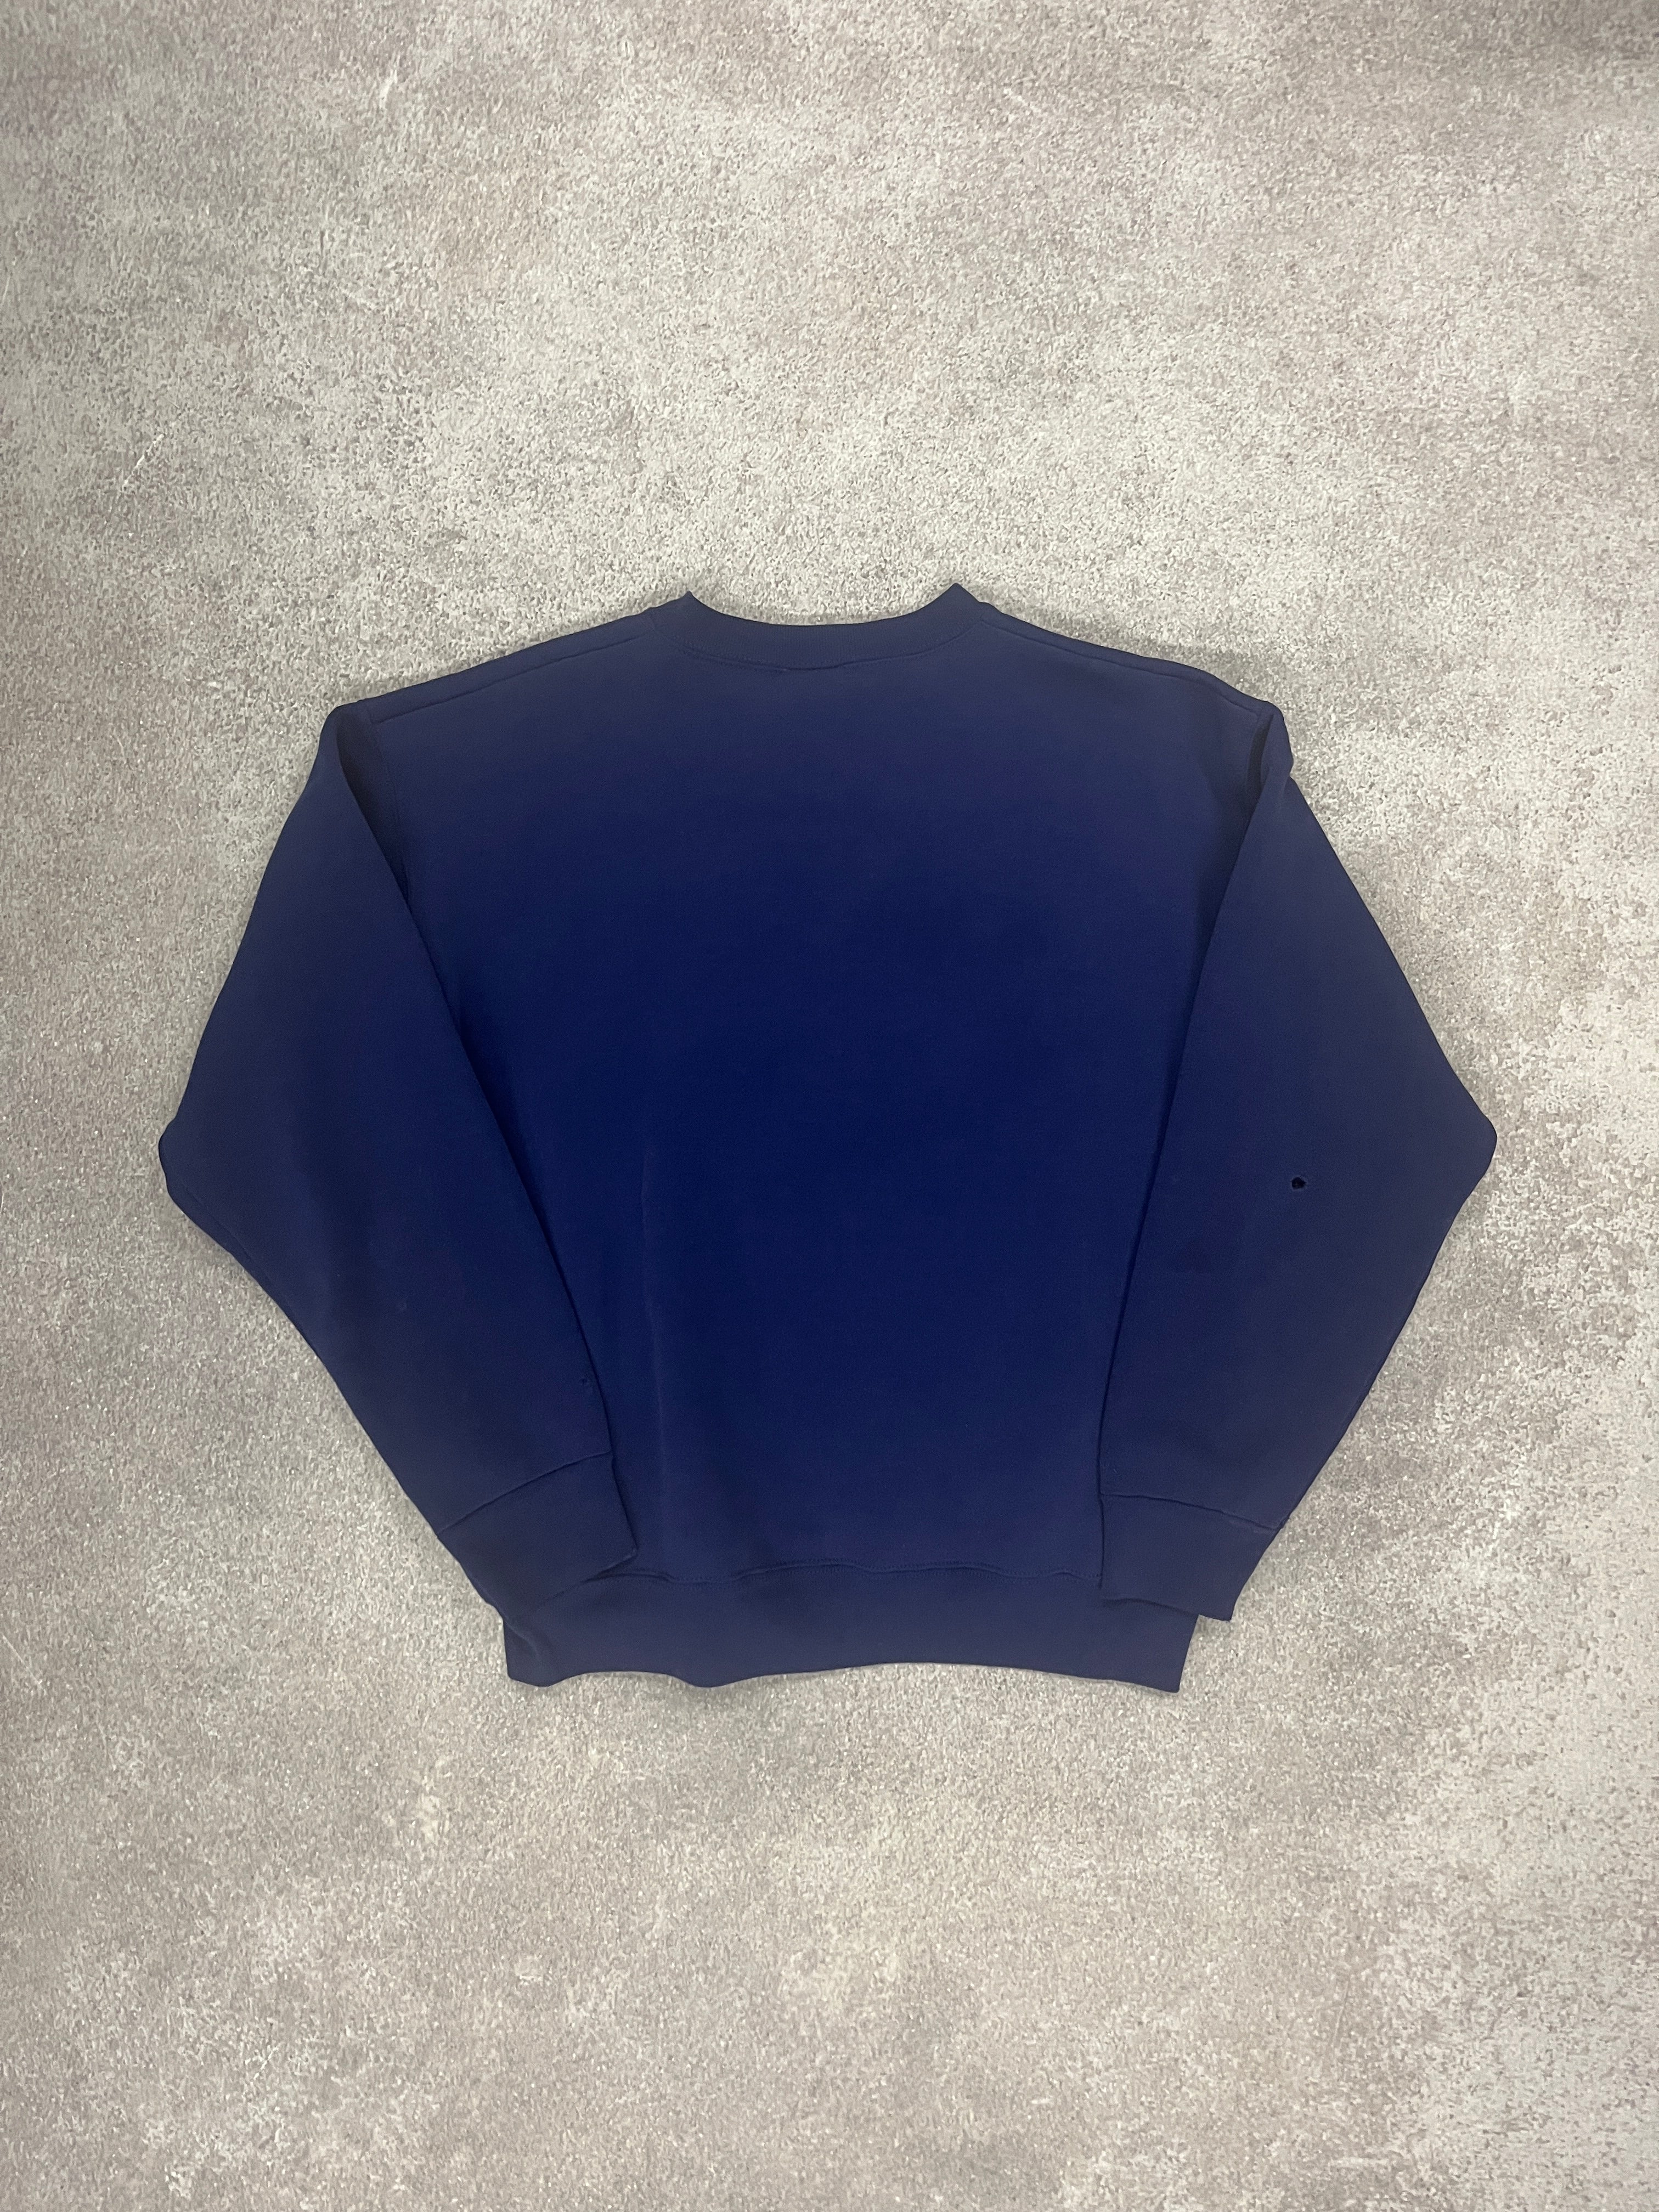 Vintage Blank Sweater Blue // Medium - RHAGHOUSE VINTAGE